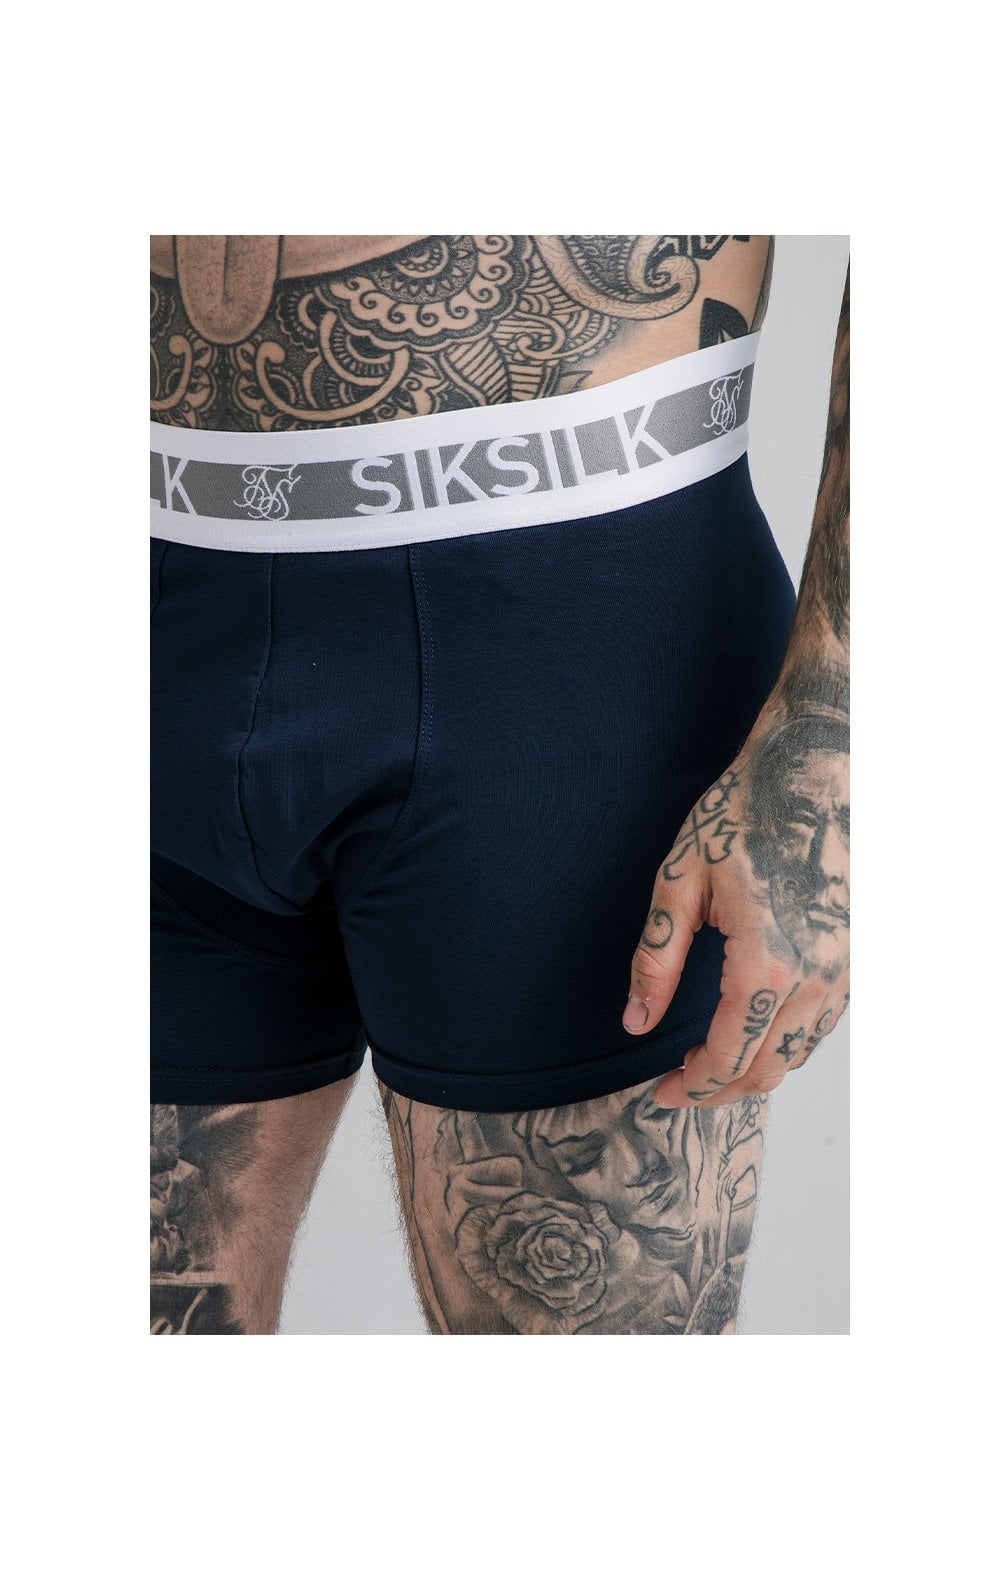 SikSilk Boxer Shorts (2 Pack) - Navy & Grey (2)